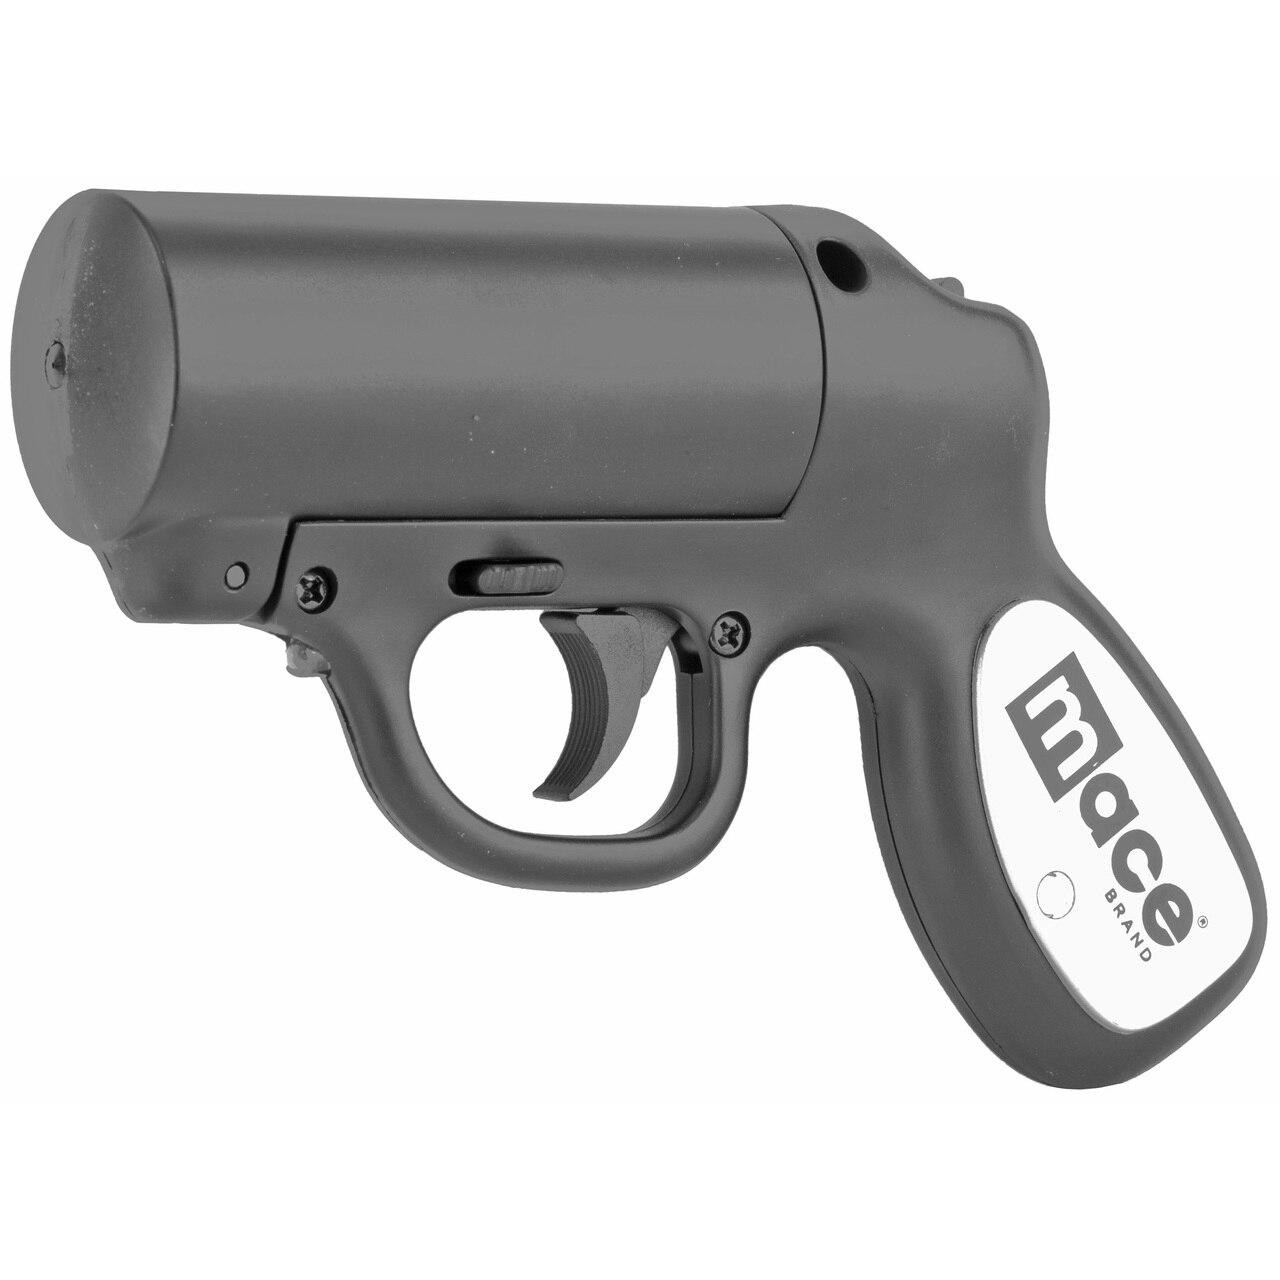 Mace Security International Msi Pepper Gun Matte Blk 1-oc/1-h20 - CT35MSI80585 022188805857